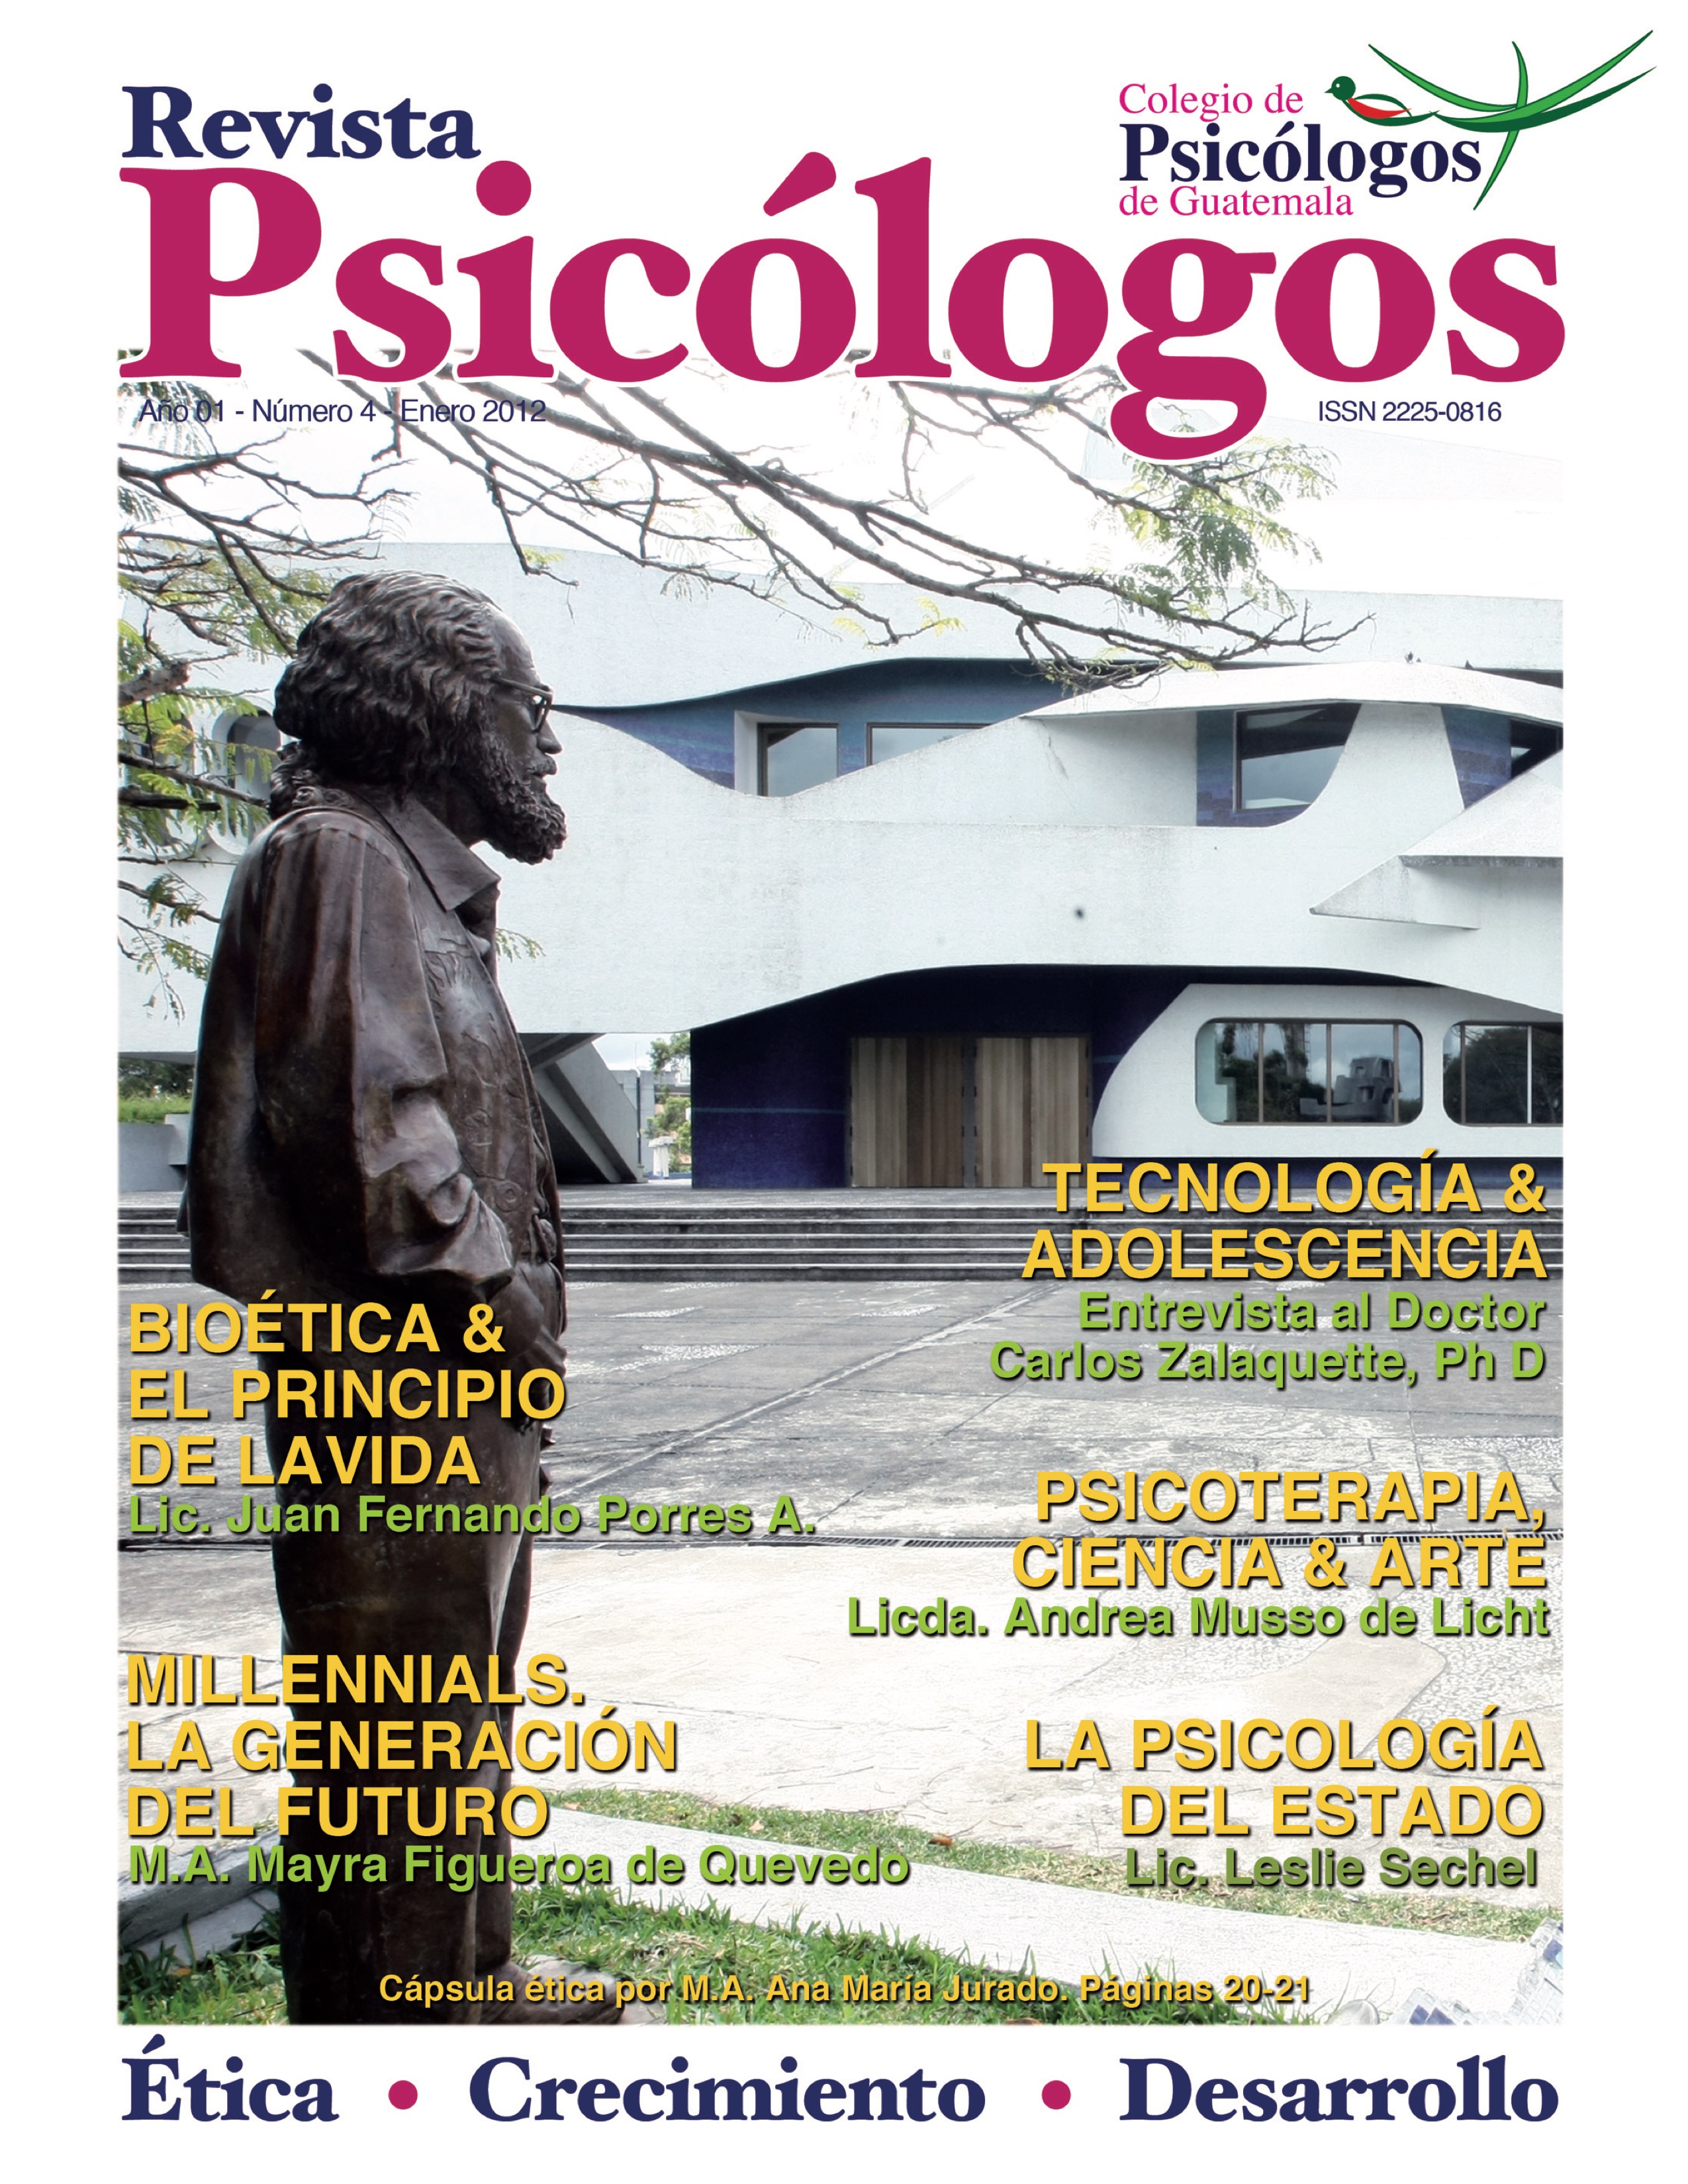 					Ver Vol. 2 Núm. 4 (2012): Revista Psicólogos No. 4
				